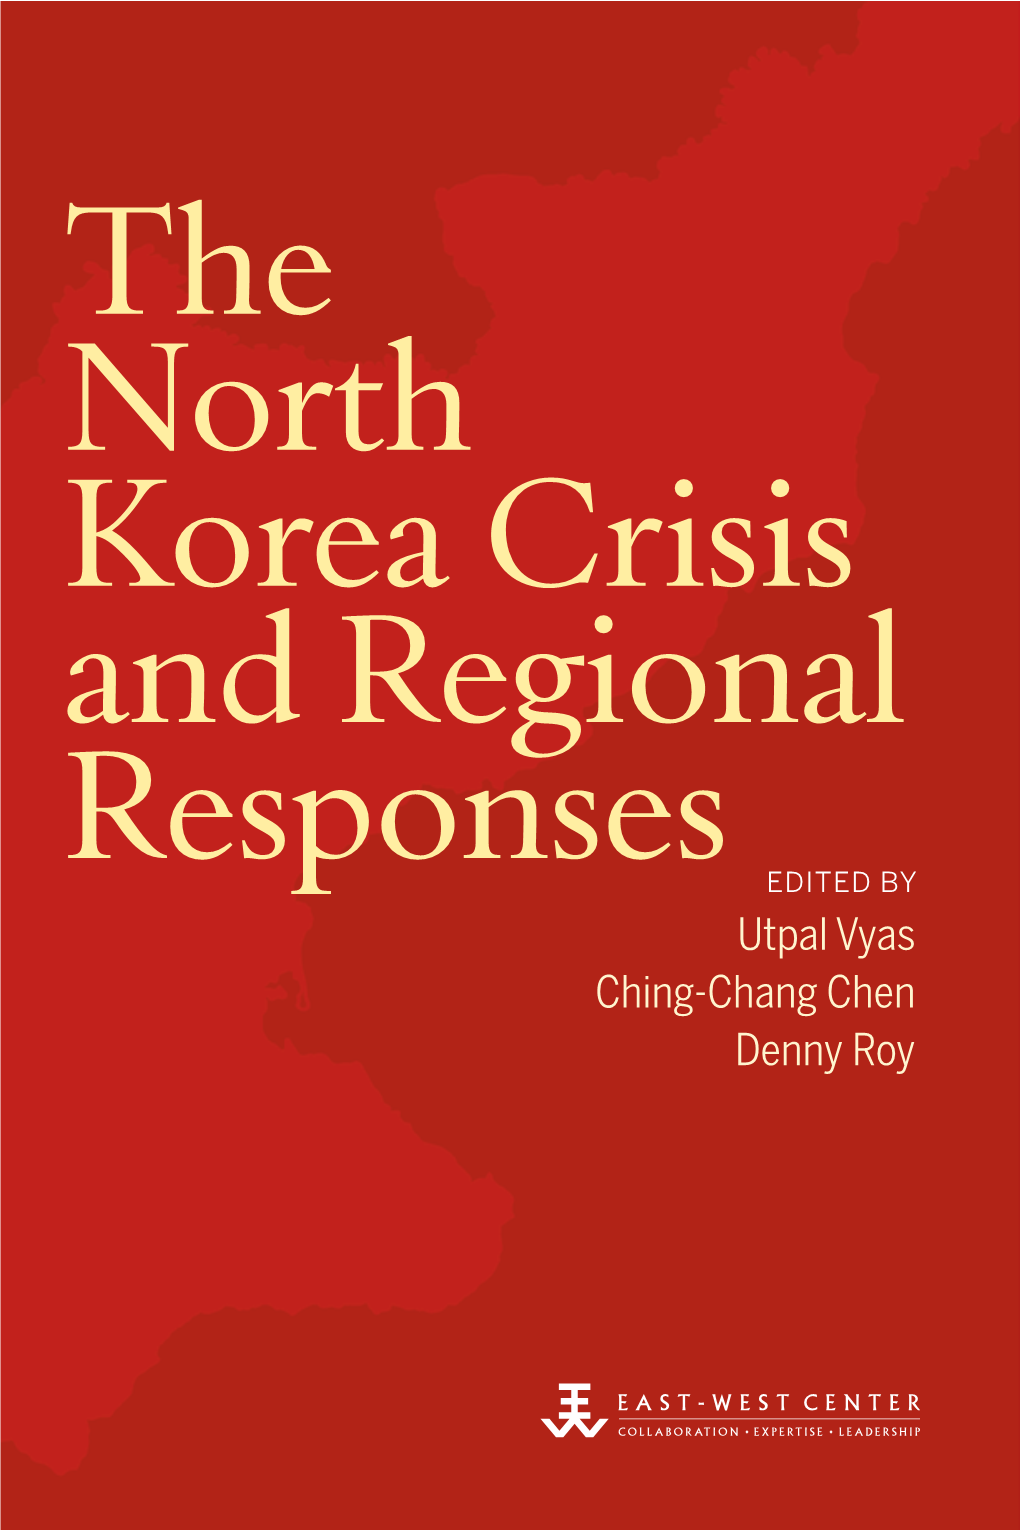 The North Korea Crisis and Regional Responses EDITED by Utpal Vyas Ching-Chang Chen Denny Roy the North Korea Crisis and Regional Responses